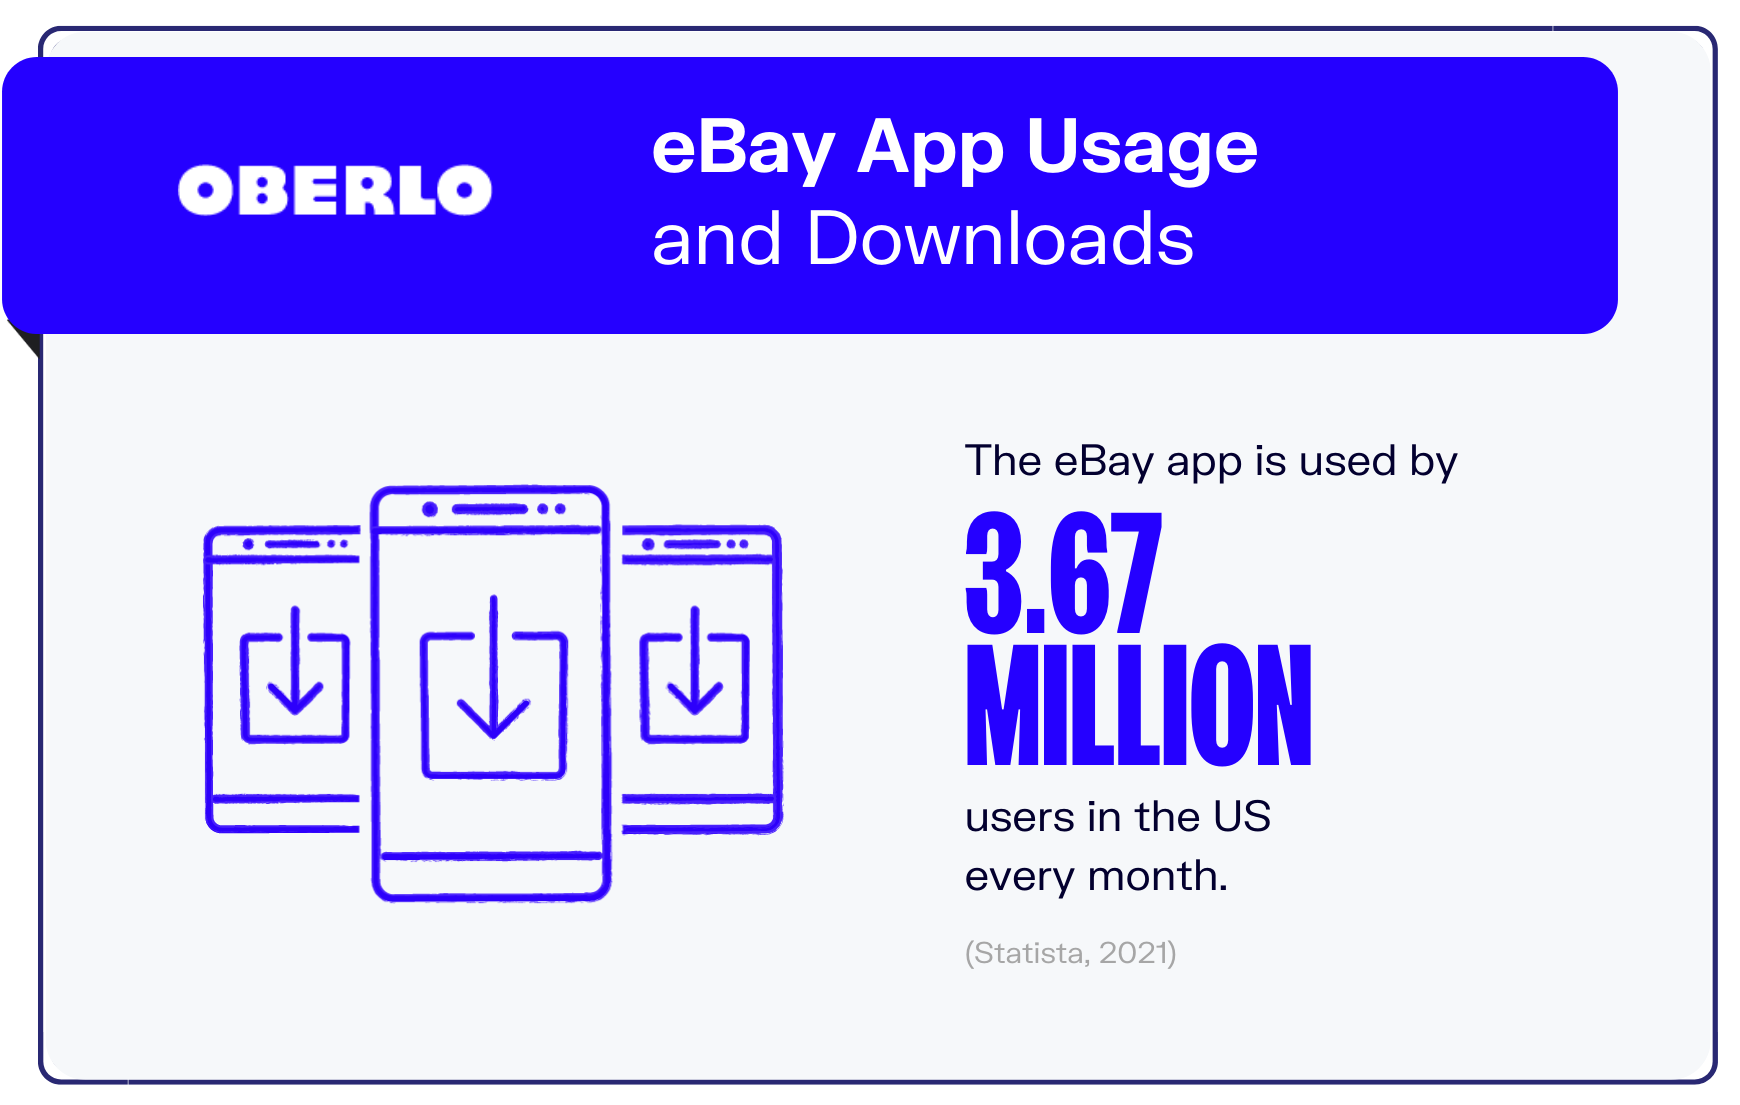 ebay statistics graphic2